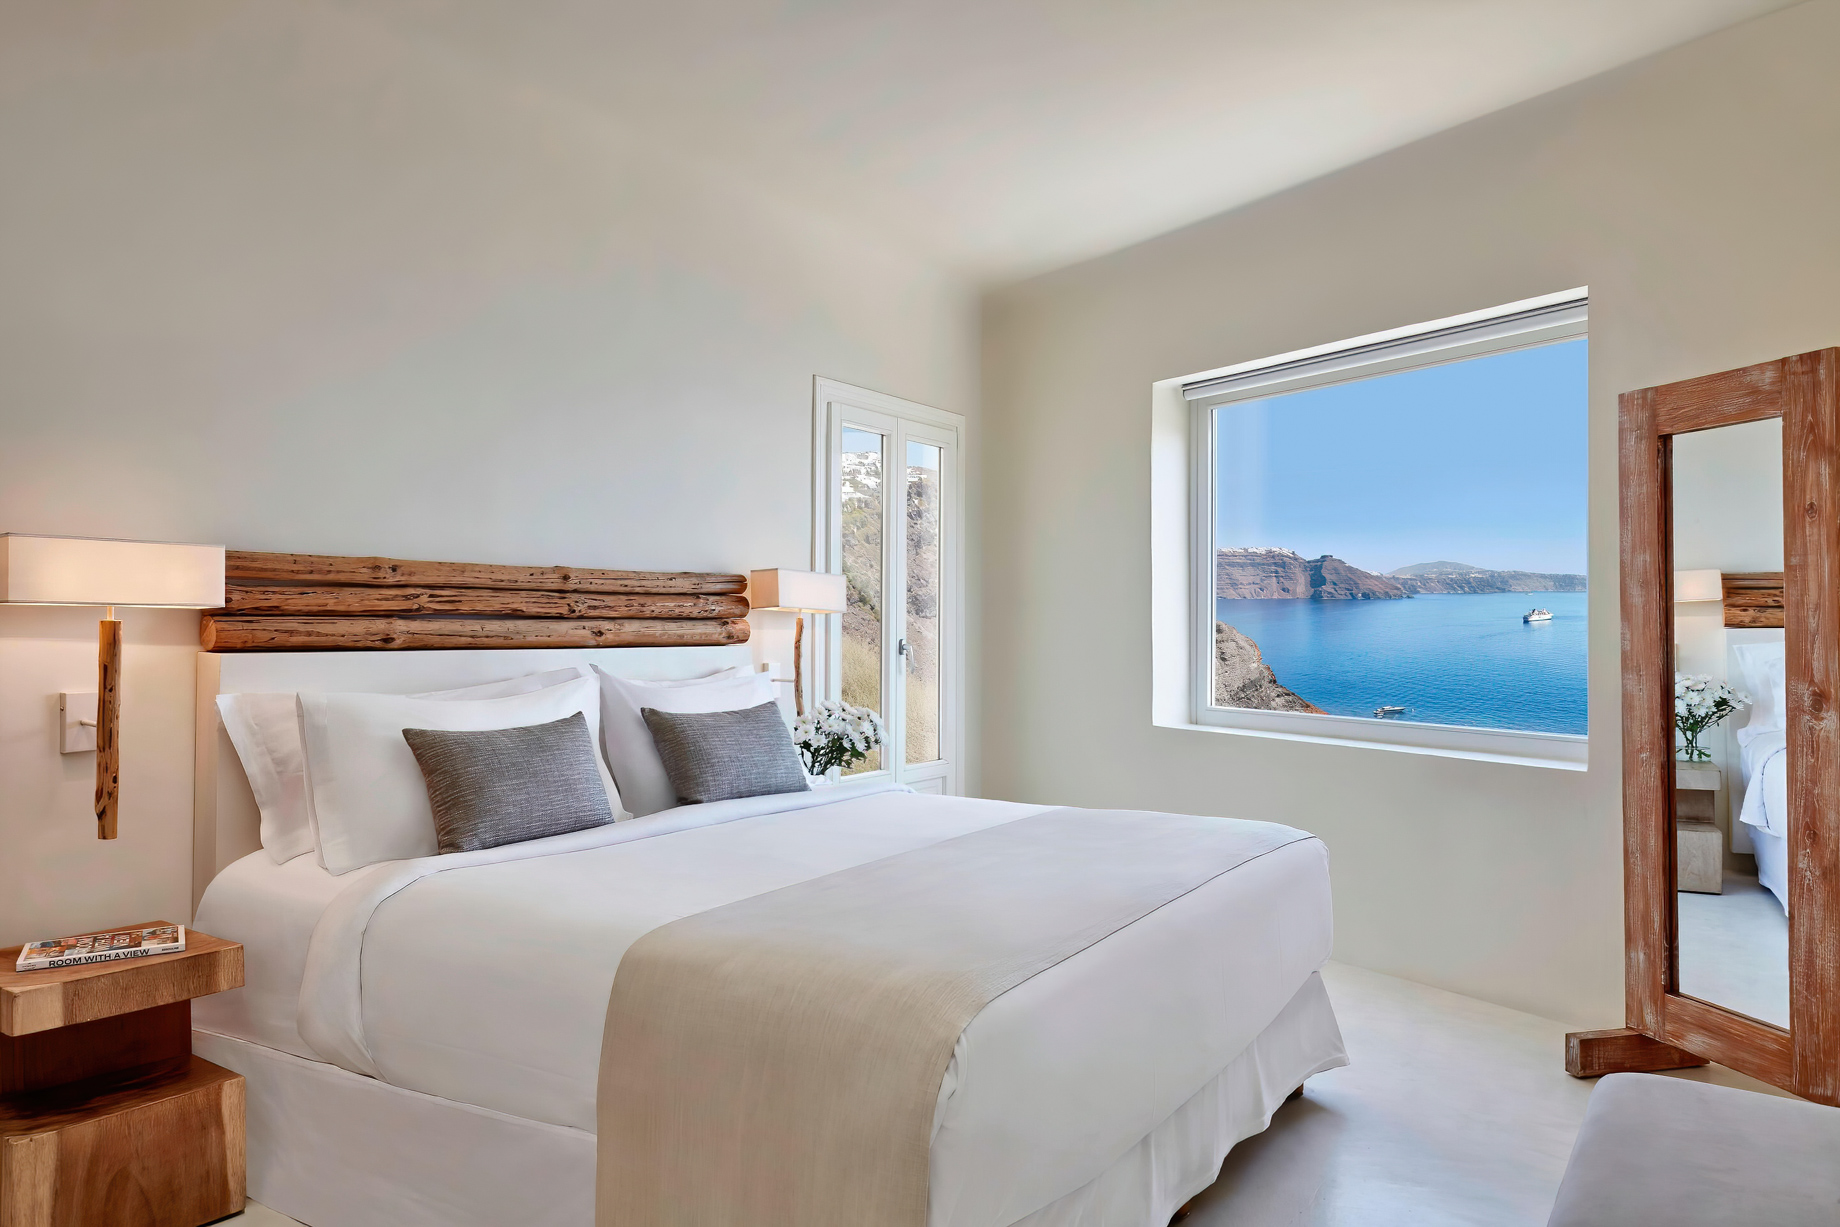 Mystique Hotel Santorini – Oia, Santorini Island, Greece - Mystery Villa Bedroom